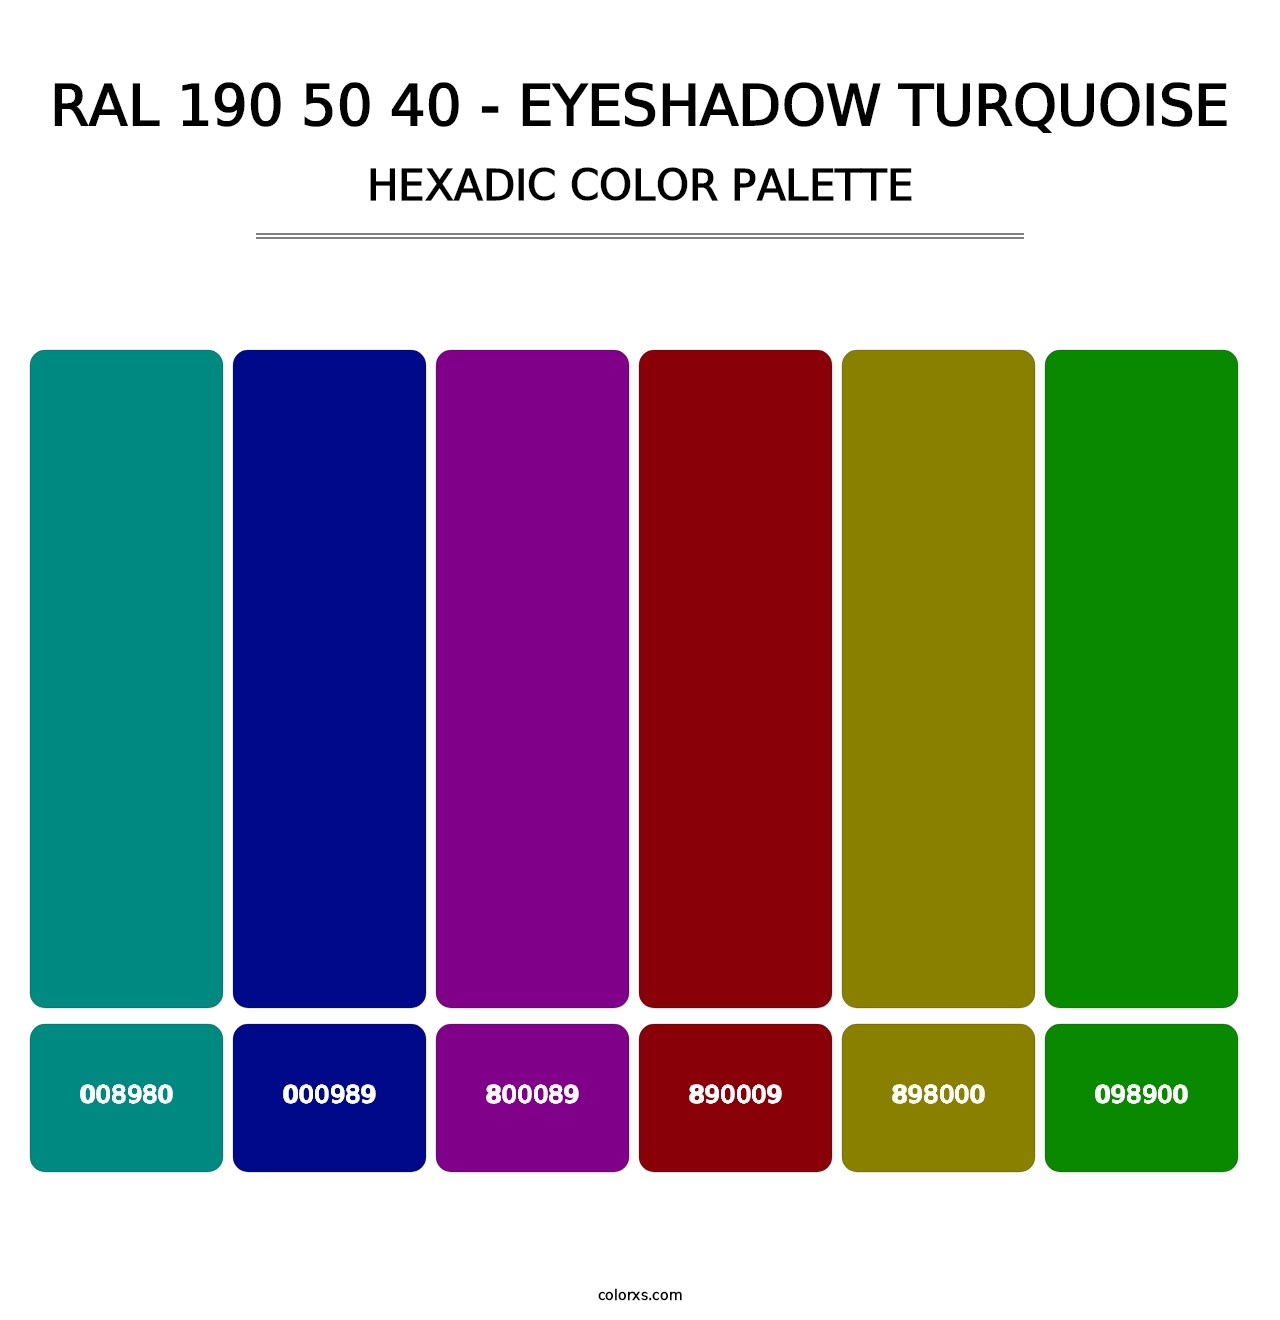 RAL 190 50 40 - Eyeshadow Turquoise - Hexadic Color Palette